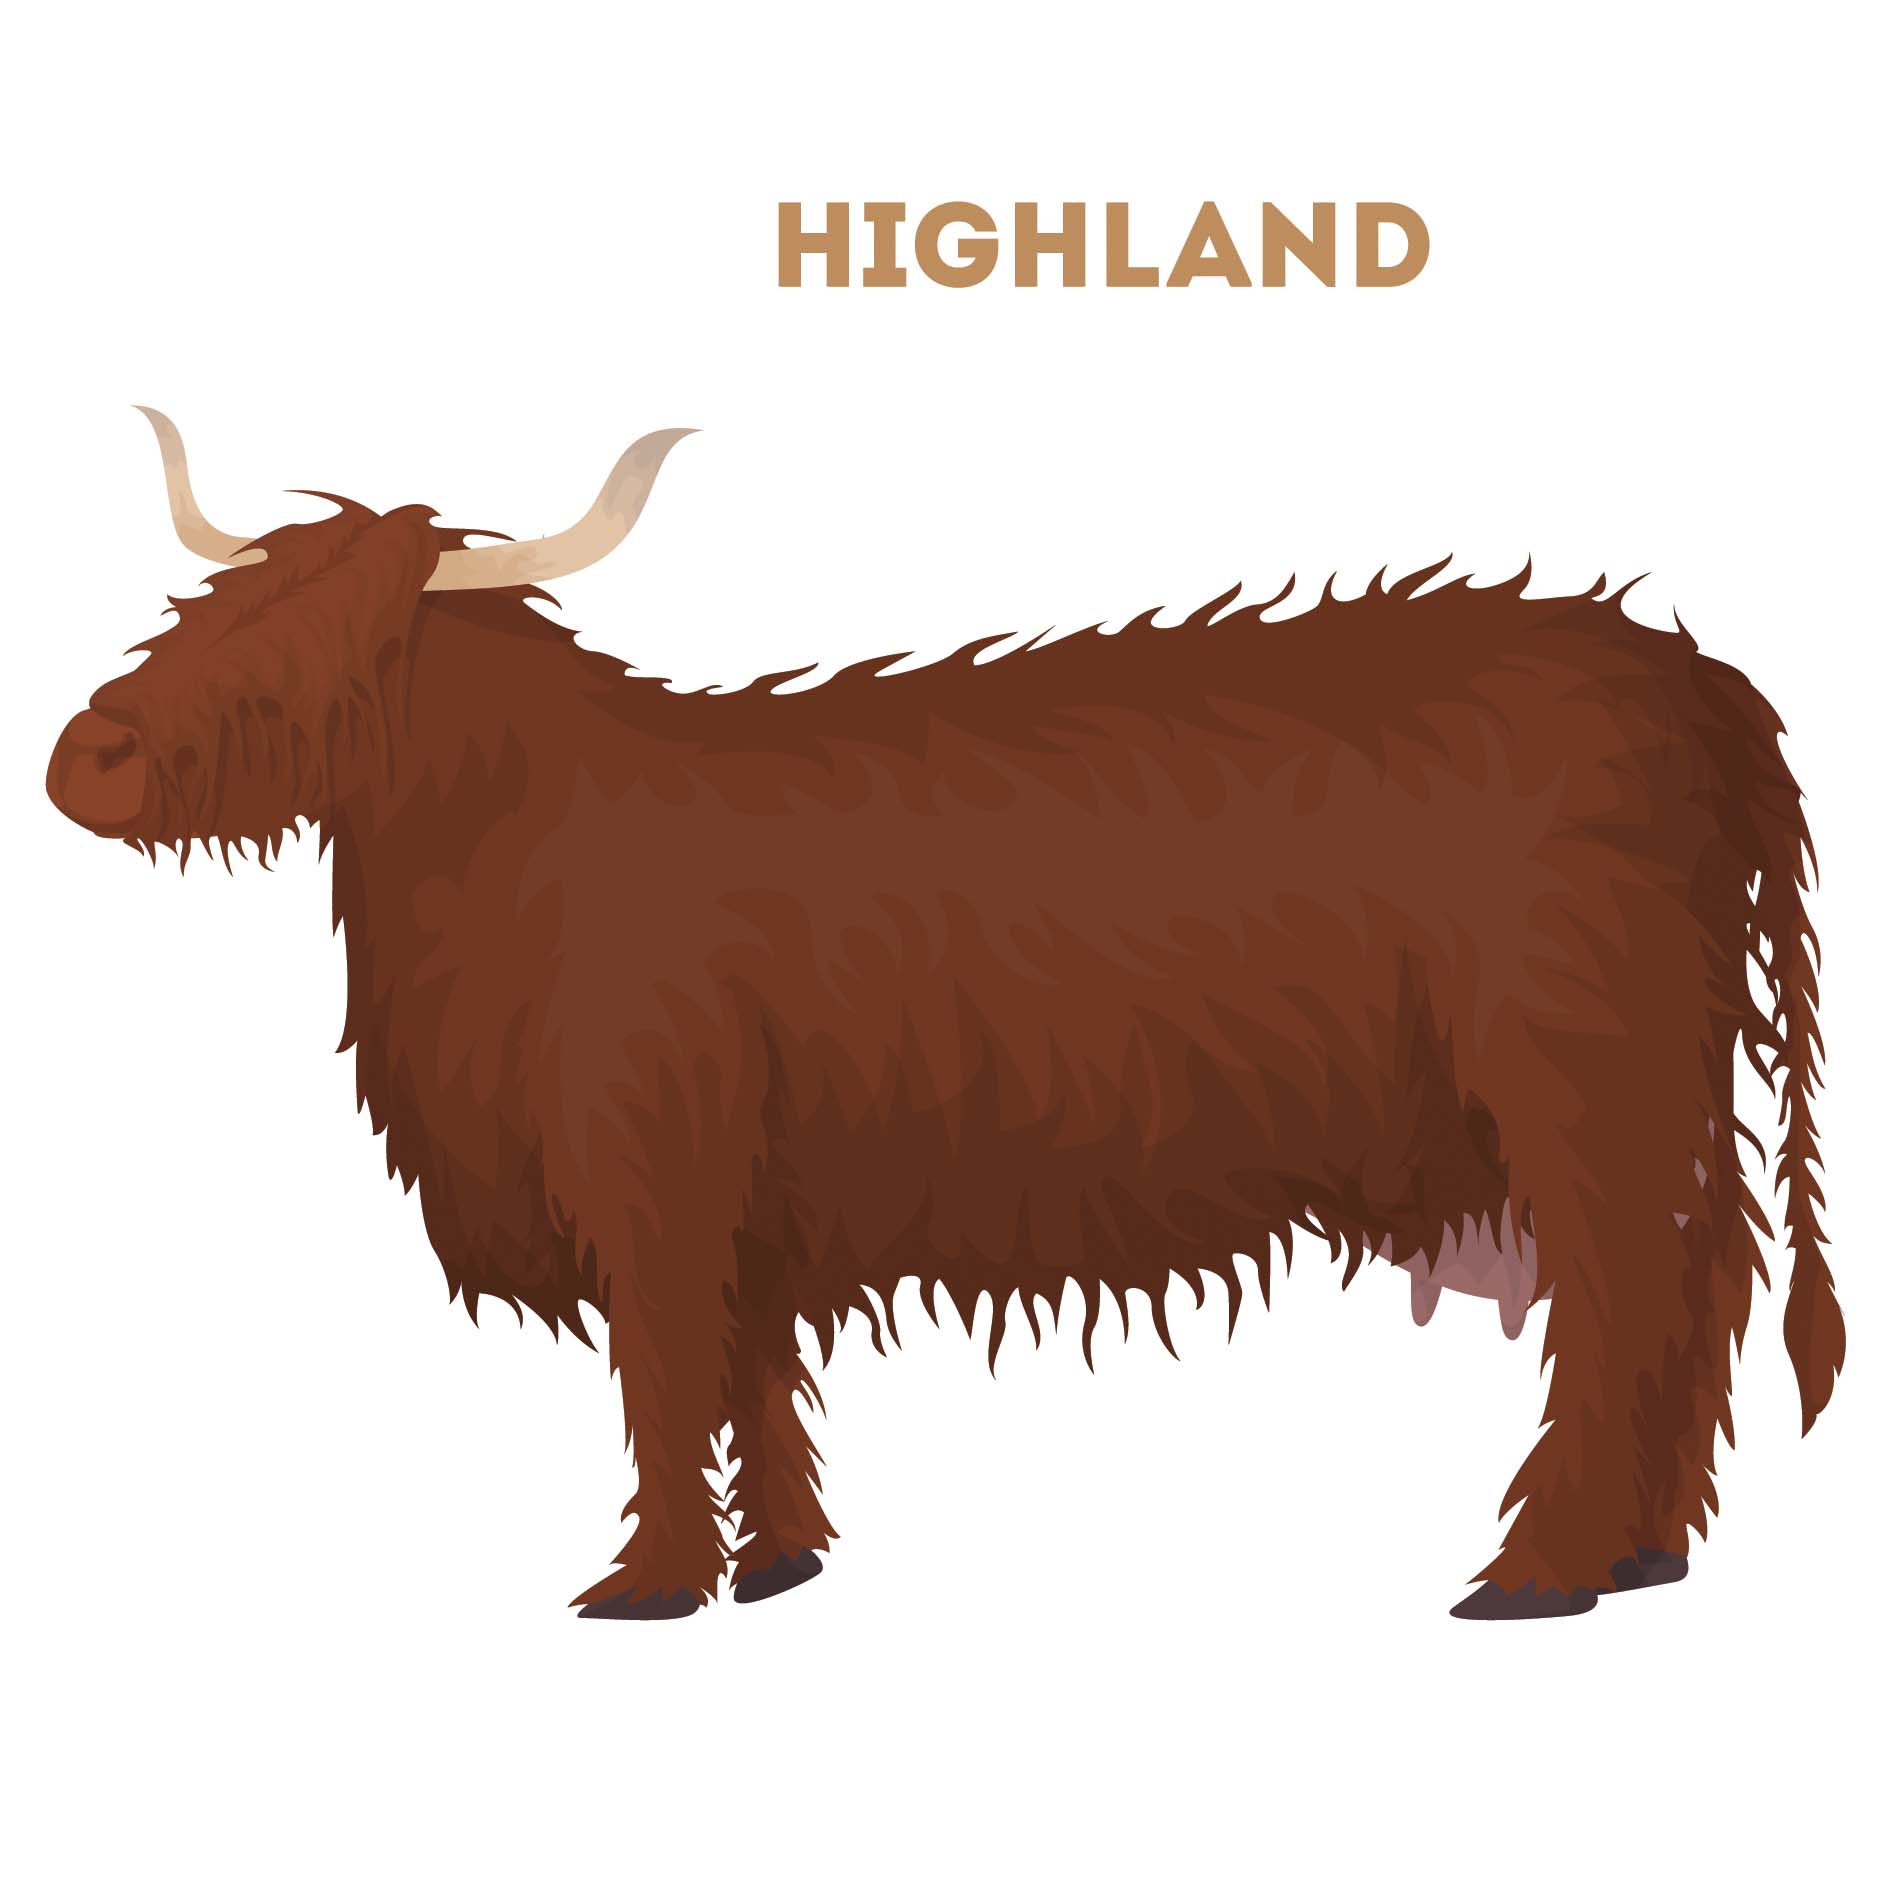 Higland cattle